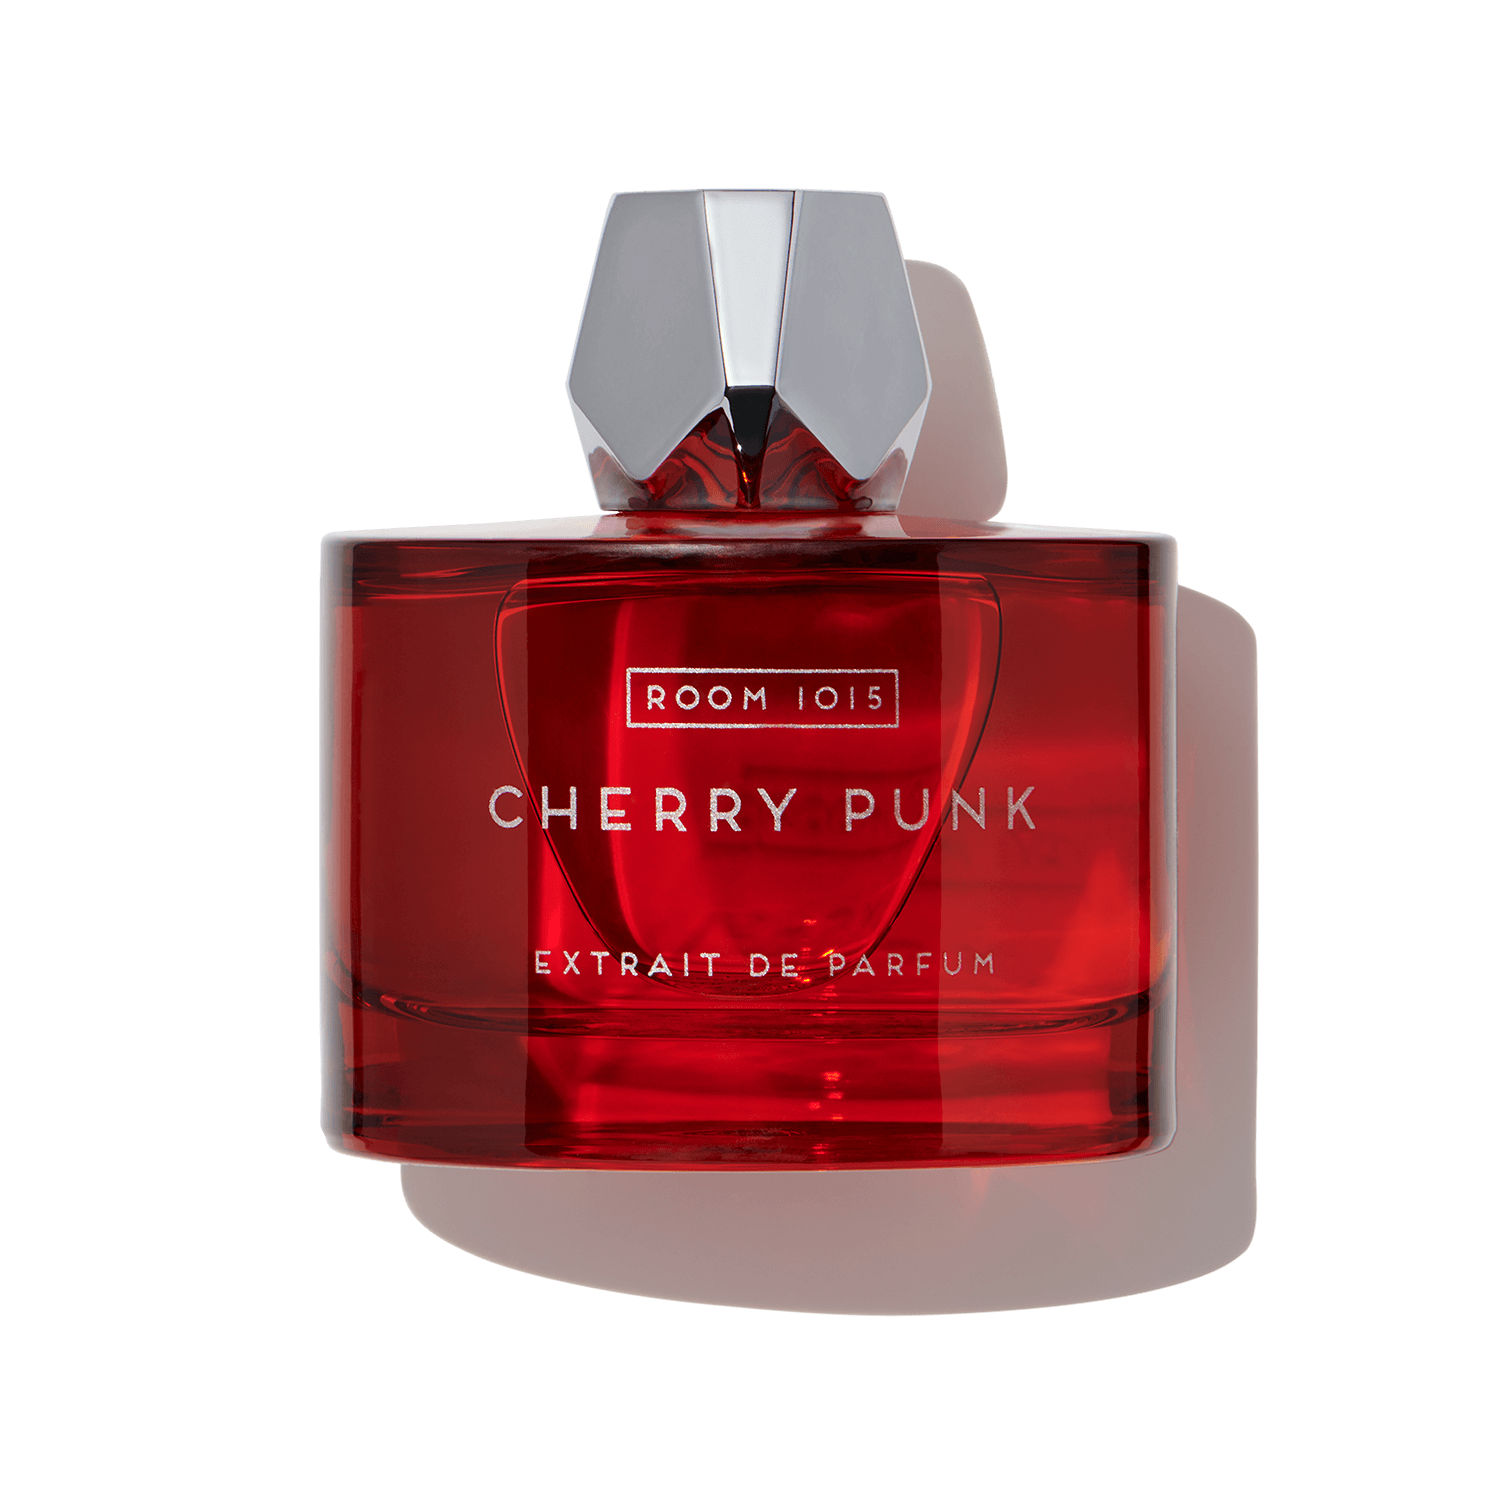 Room 1015 Cherry Punk Extrait de Parfum for $6.95 | Scentbird